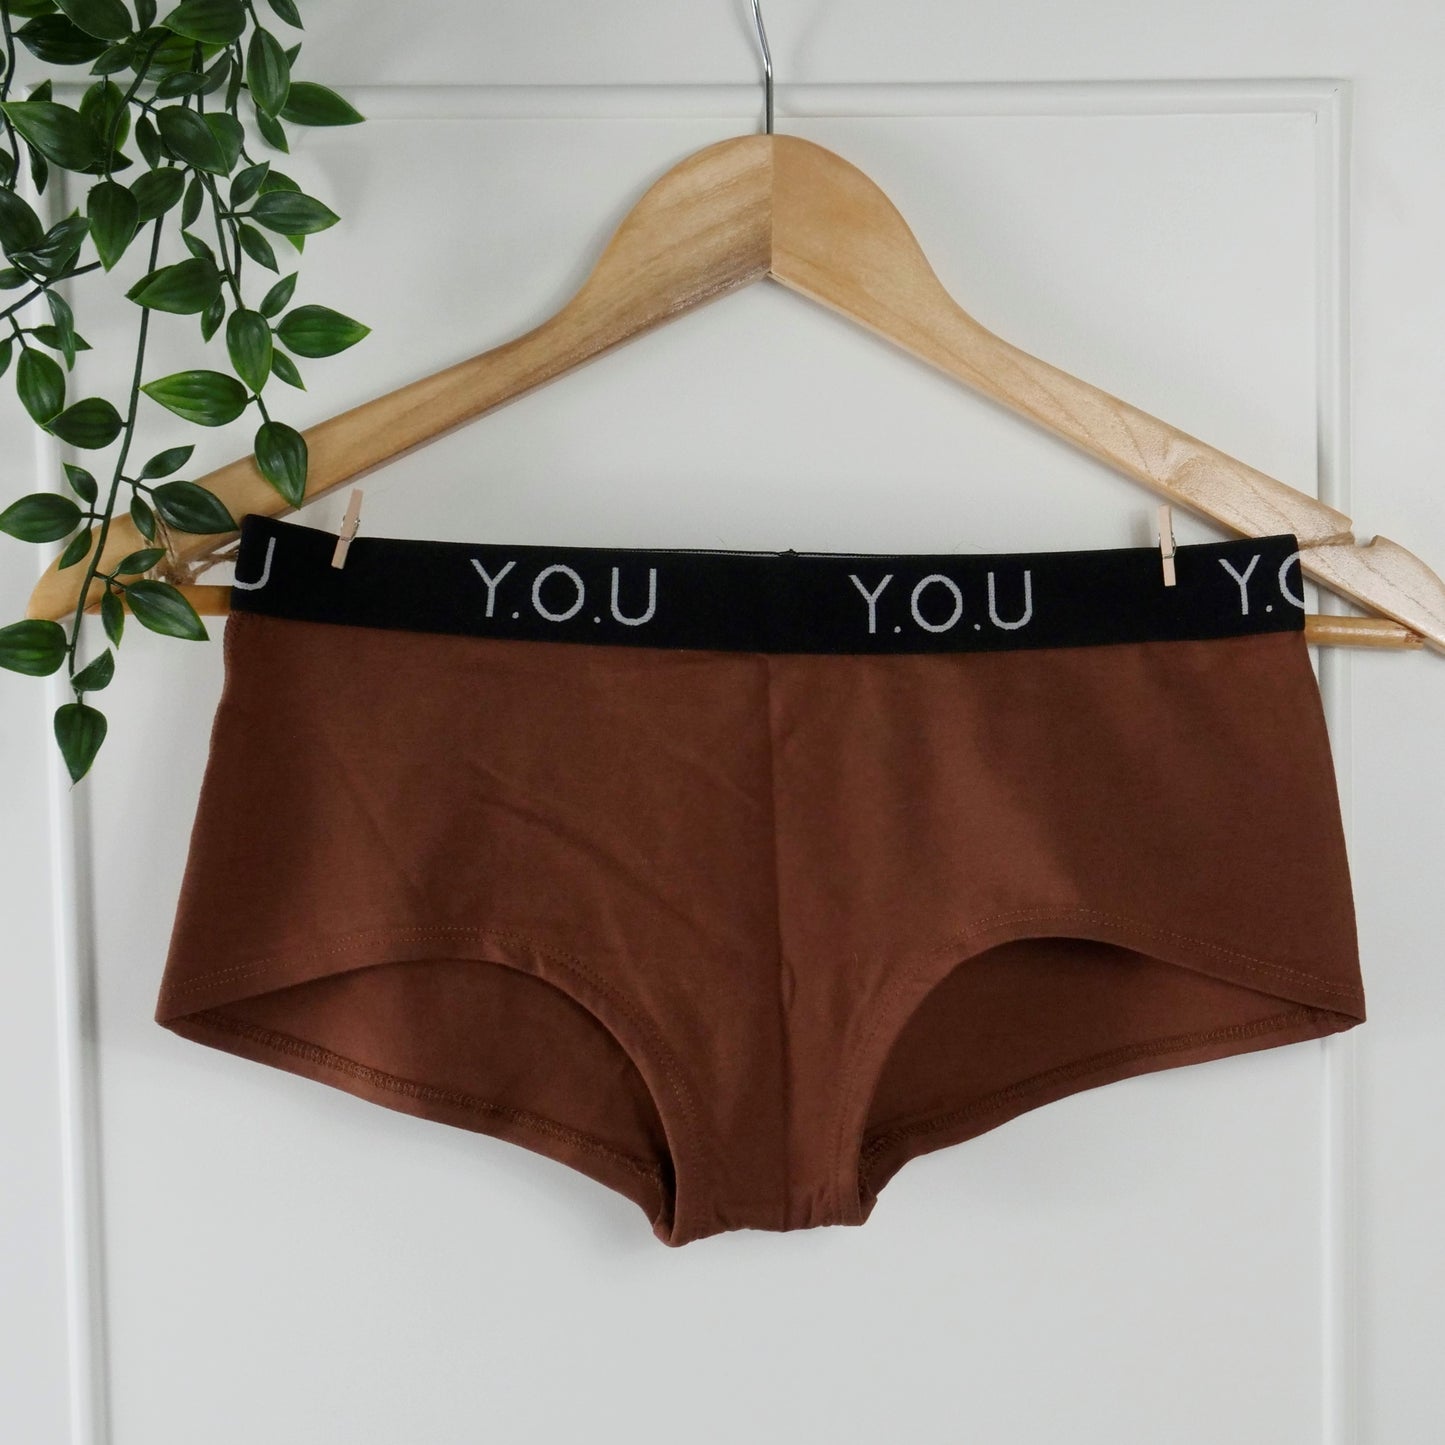 Women's organic cotton matching bralette and Y.O.U boy shorts set - chestnut (mid nude)